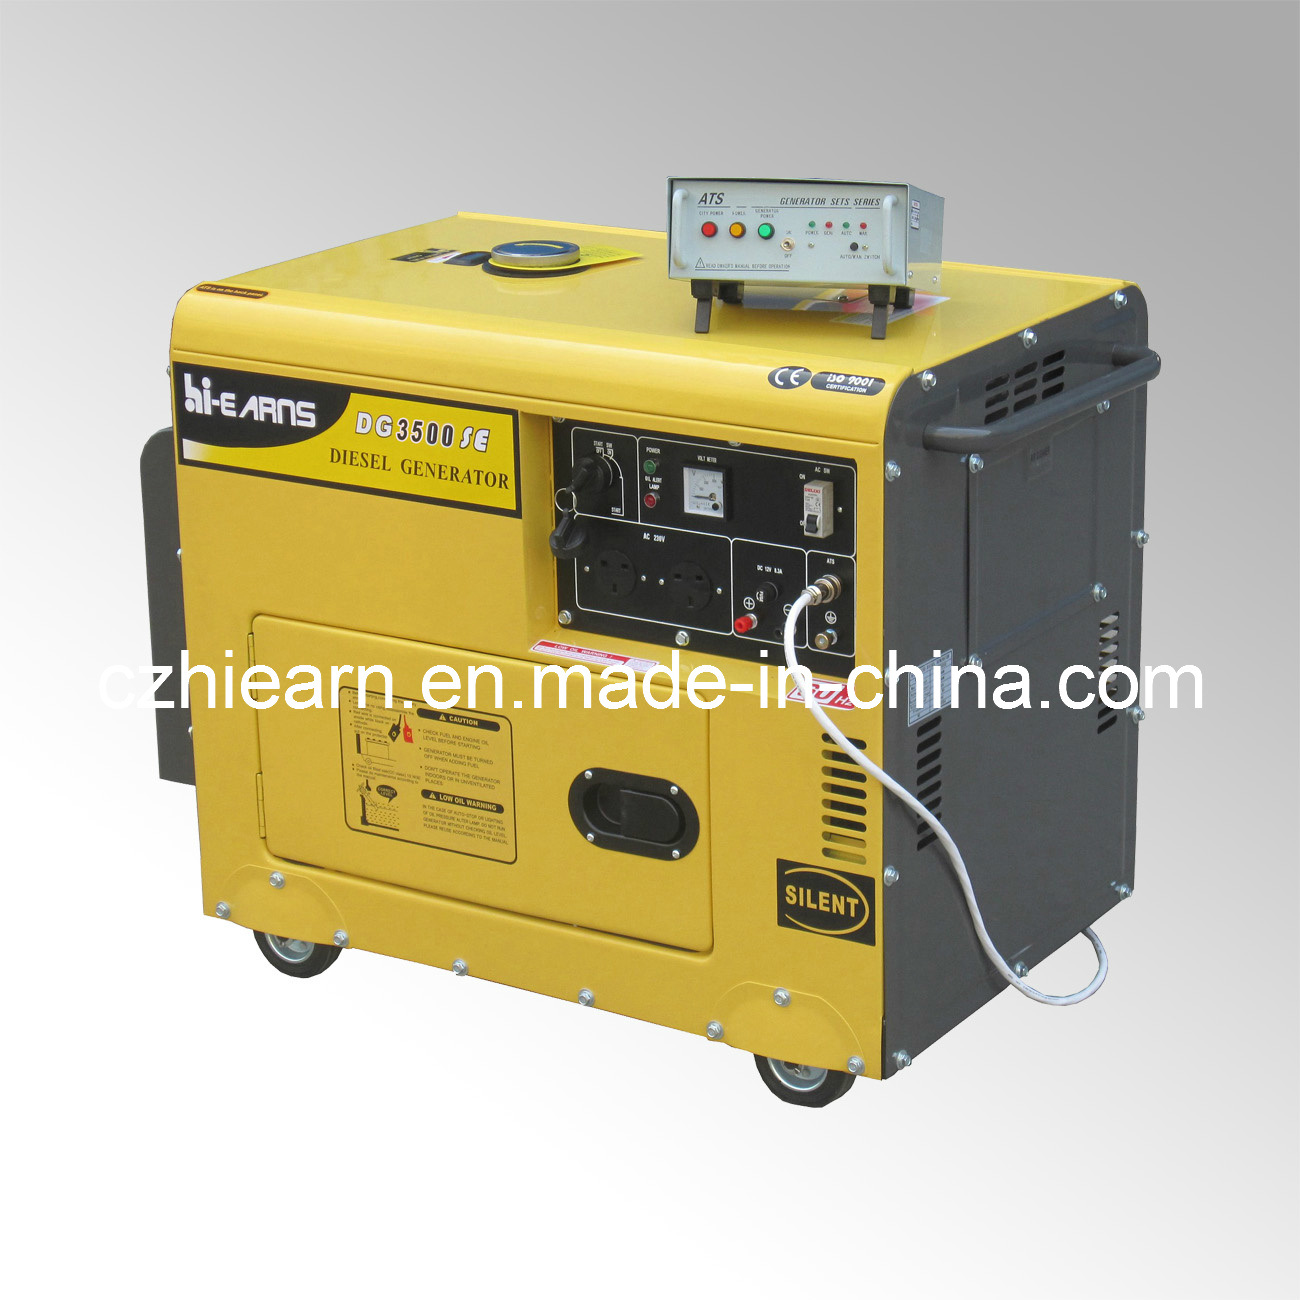 Air-Cooled Silent Type Diesel Generator (DG3500SE+ATS)